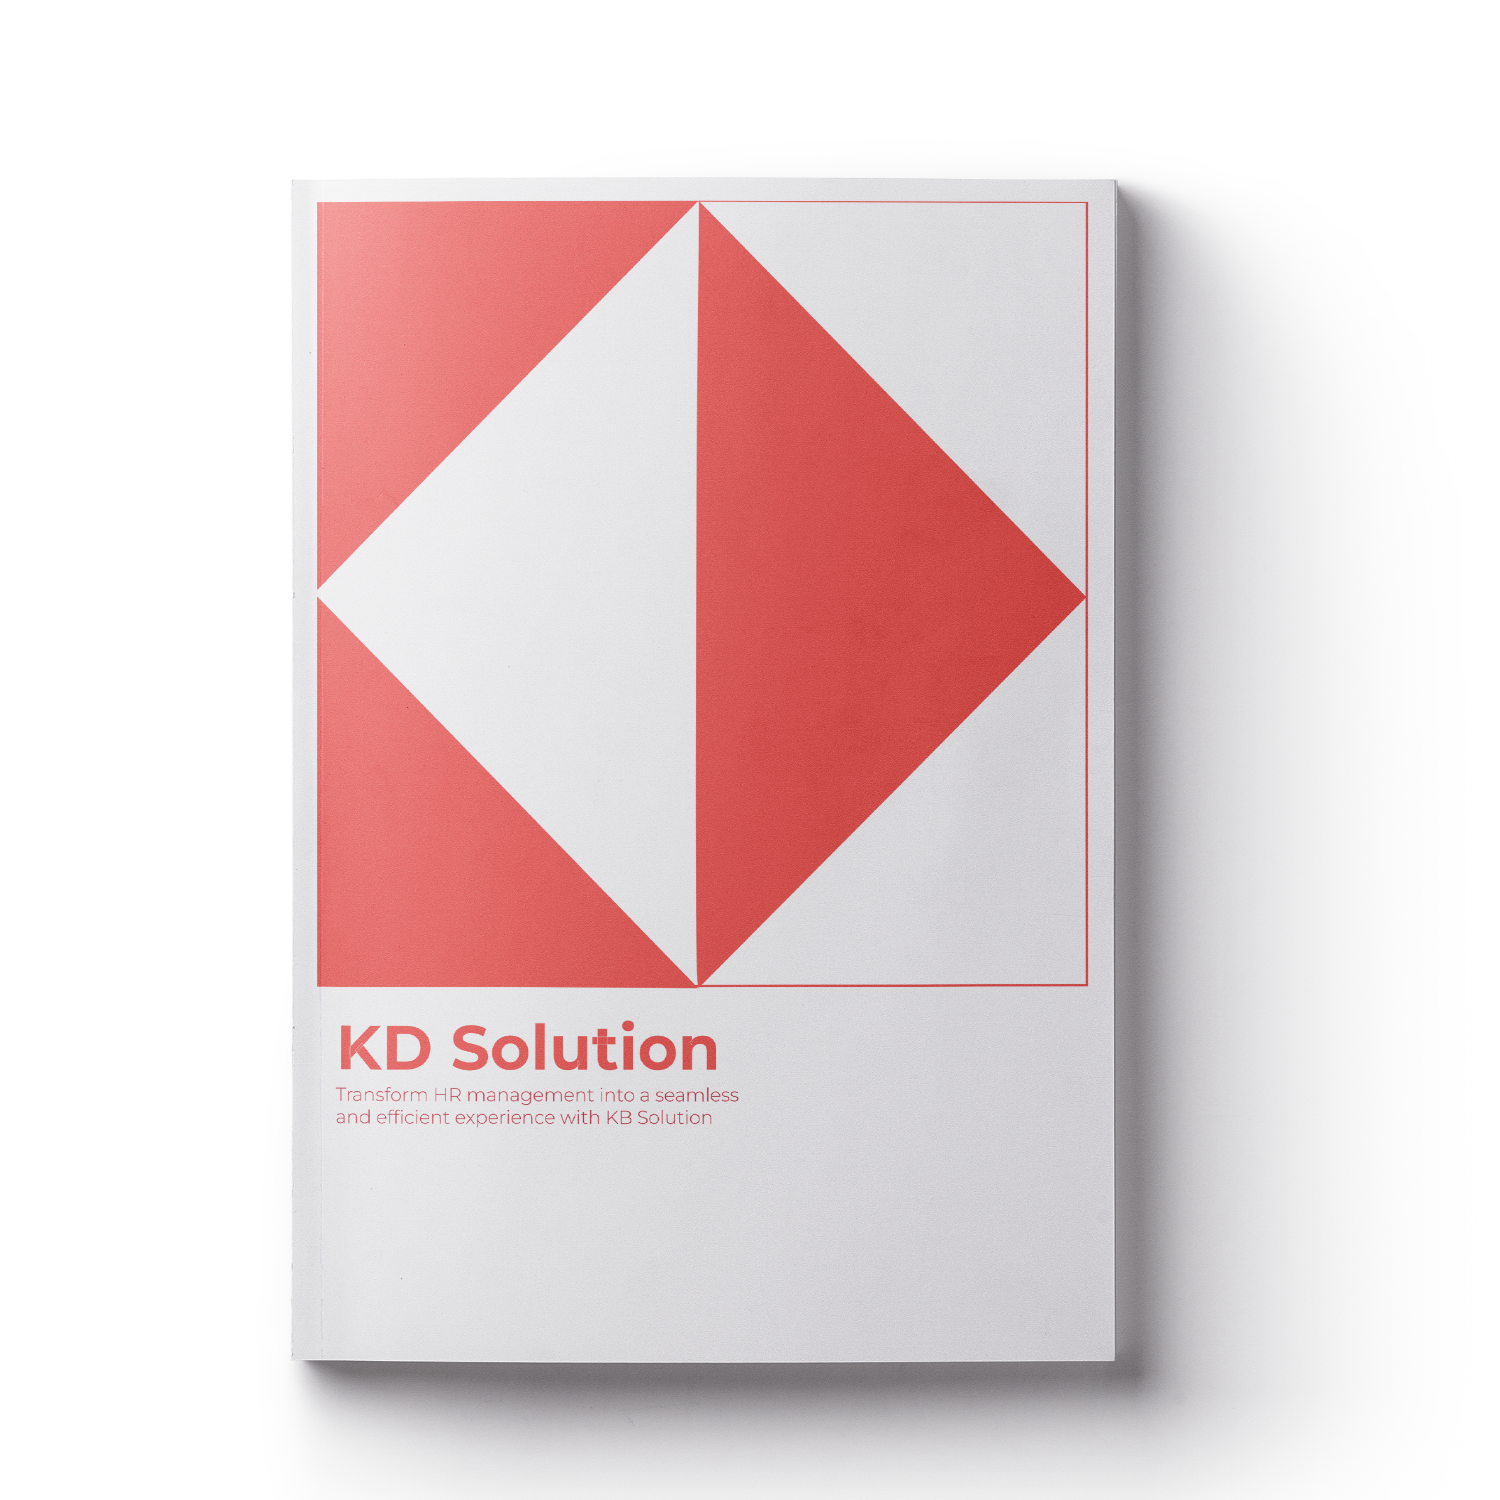 KD-solution Branding Start up - Guide de présentation - Vanhuffel